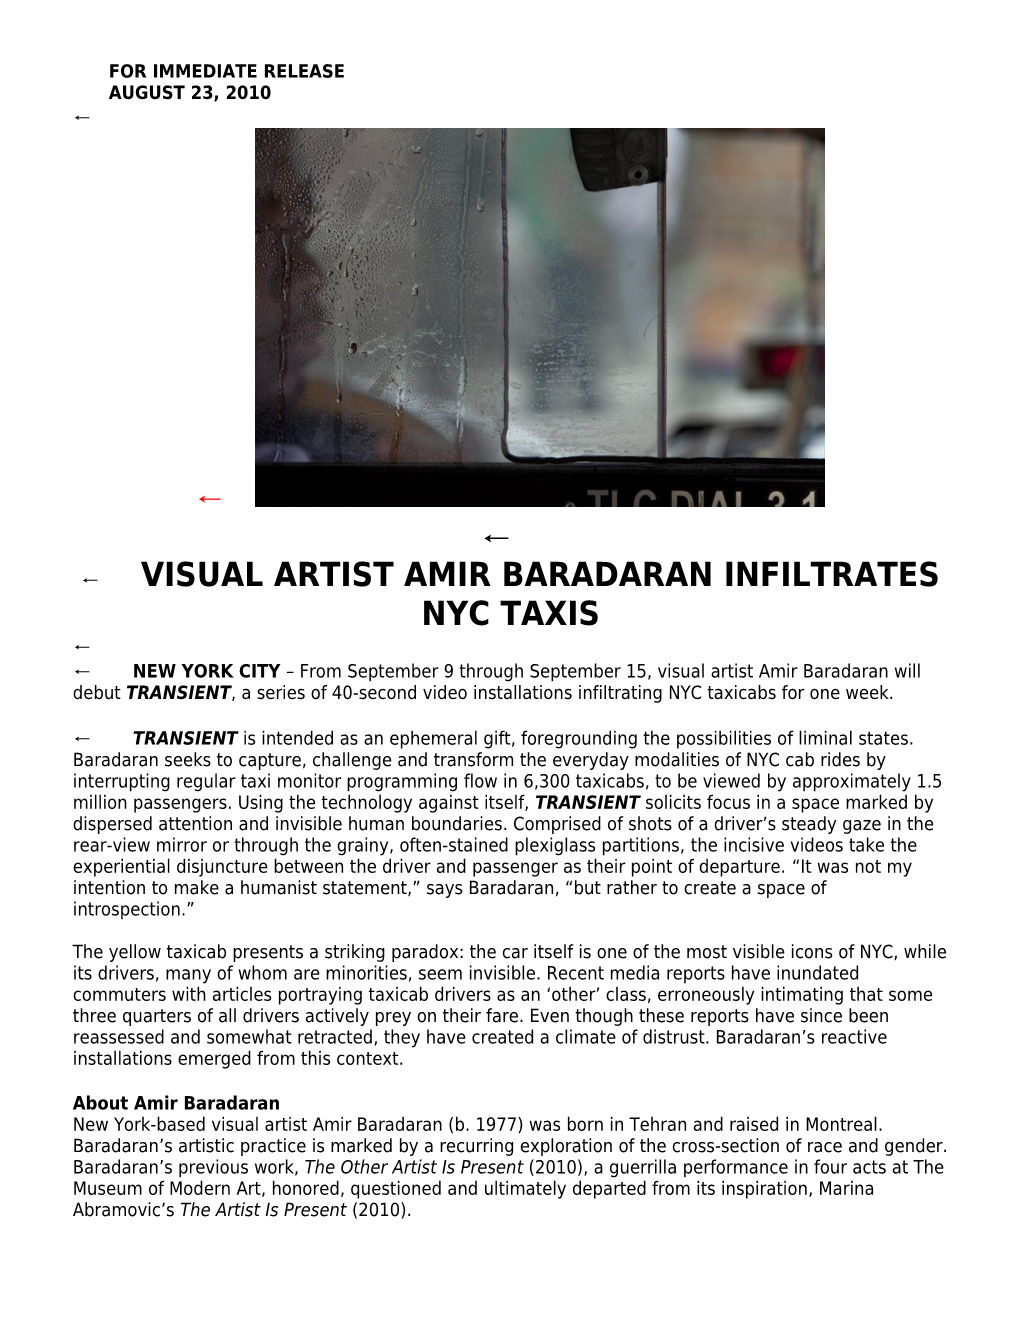 Visual Artist Amir Baradaran Infiltrates Nyc Taxis